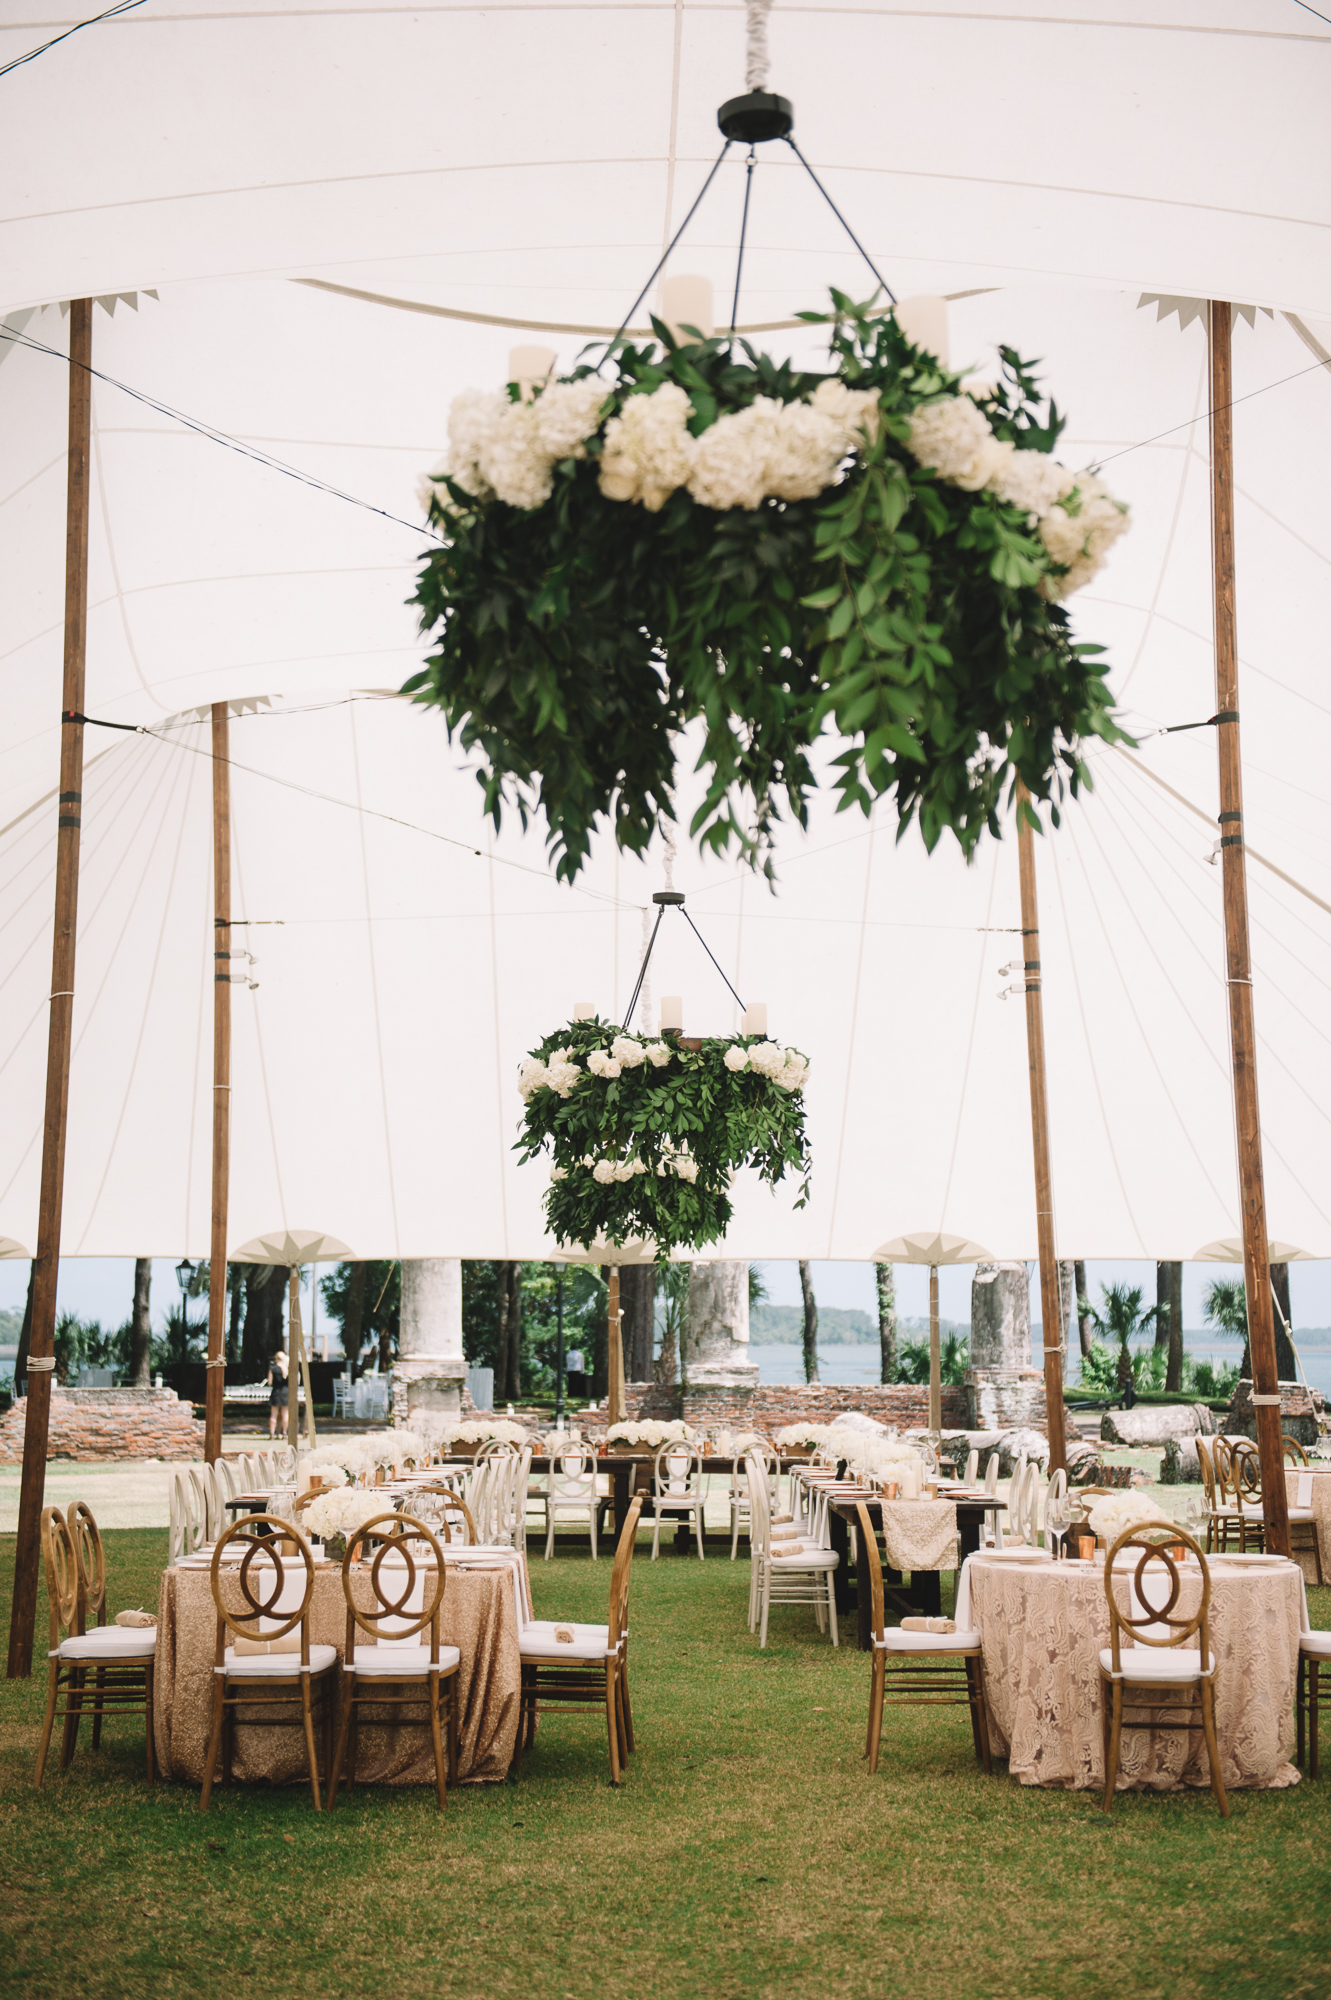 Tent Wedding with Greenery Chandeliers